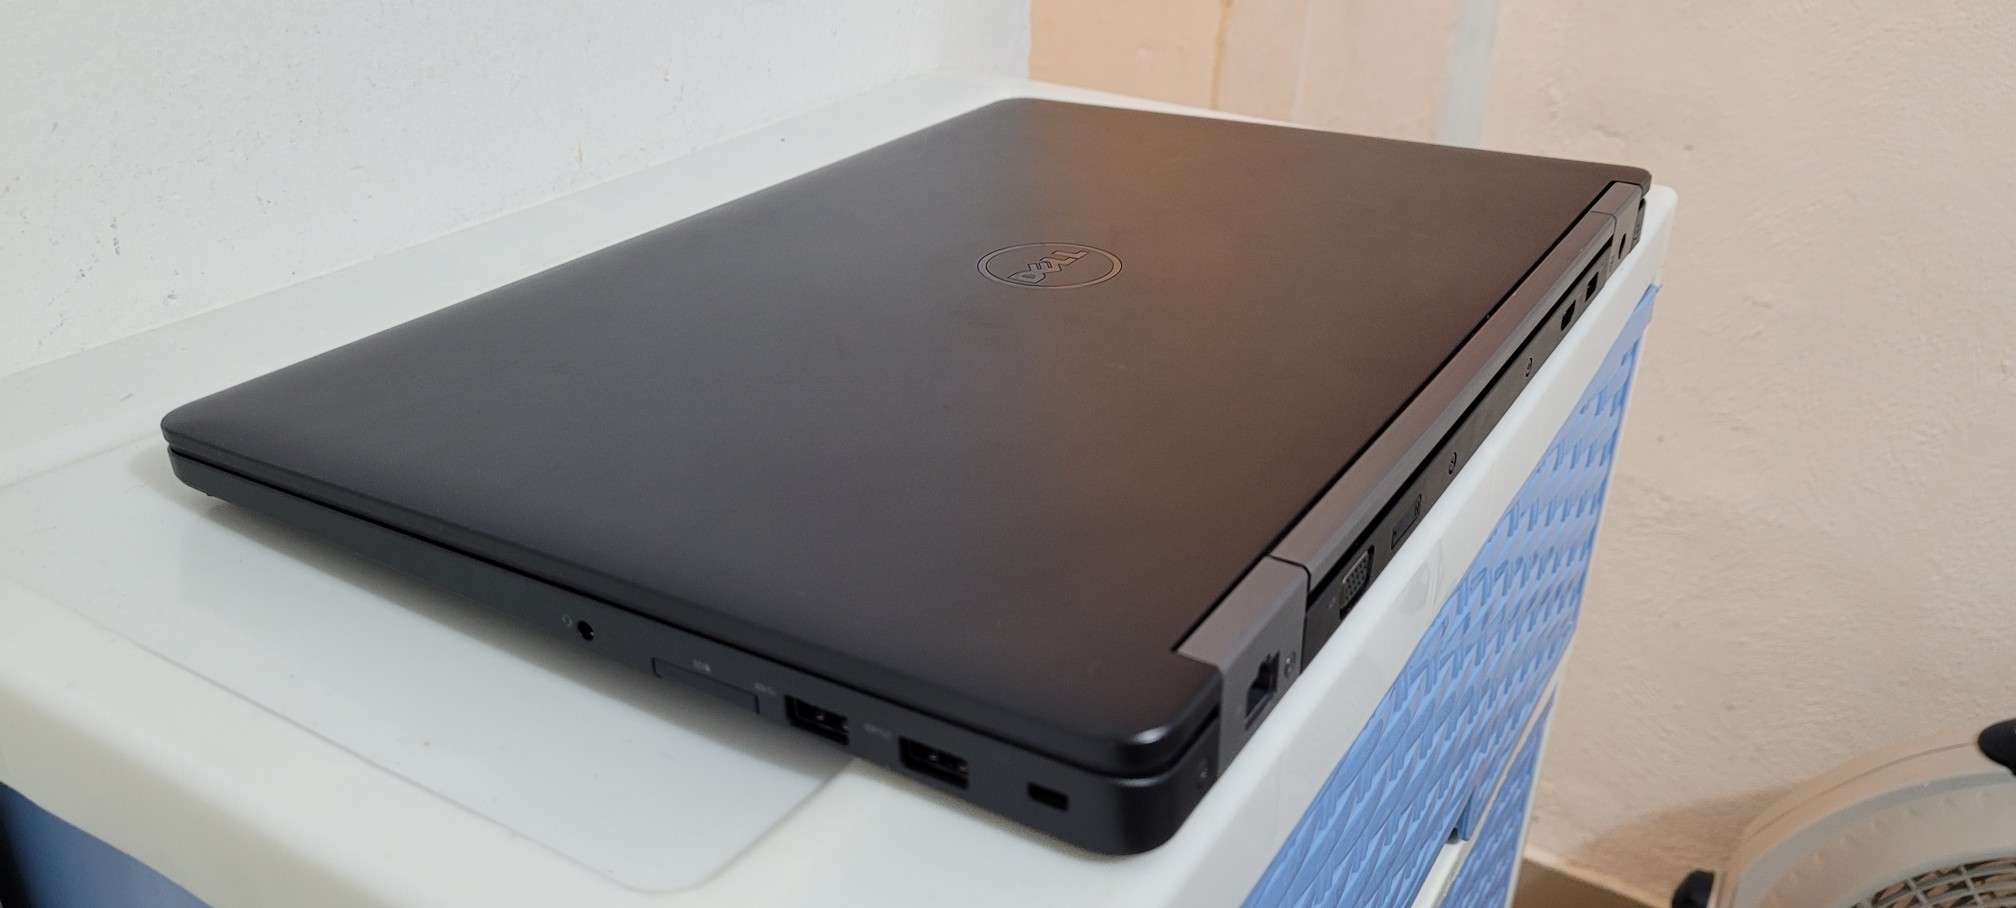 computadoras y laptops - Dell Slim 14 Pulg Core i7 6ta Ram 16gb ddr4 Disco 256gb SSD VIDEO 8GB 2